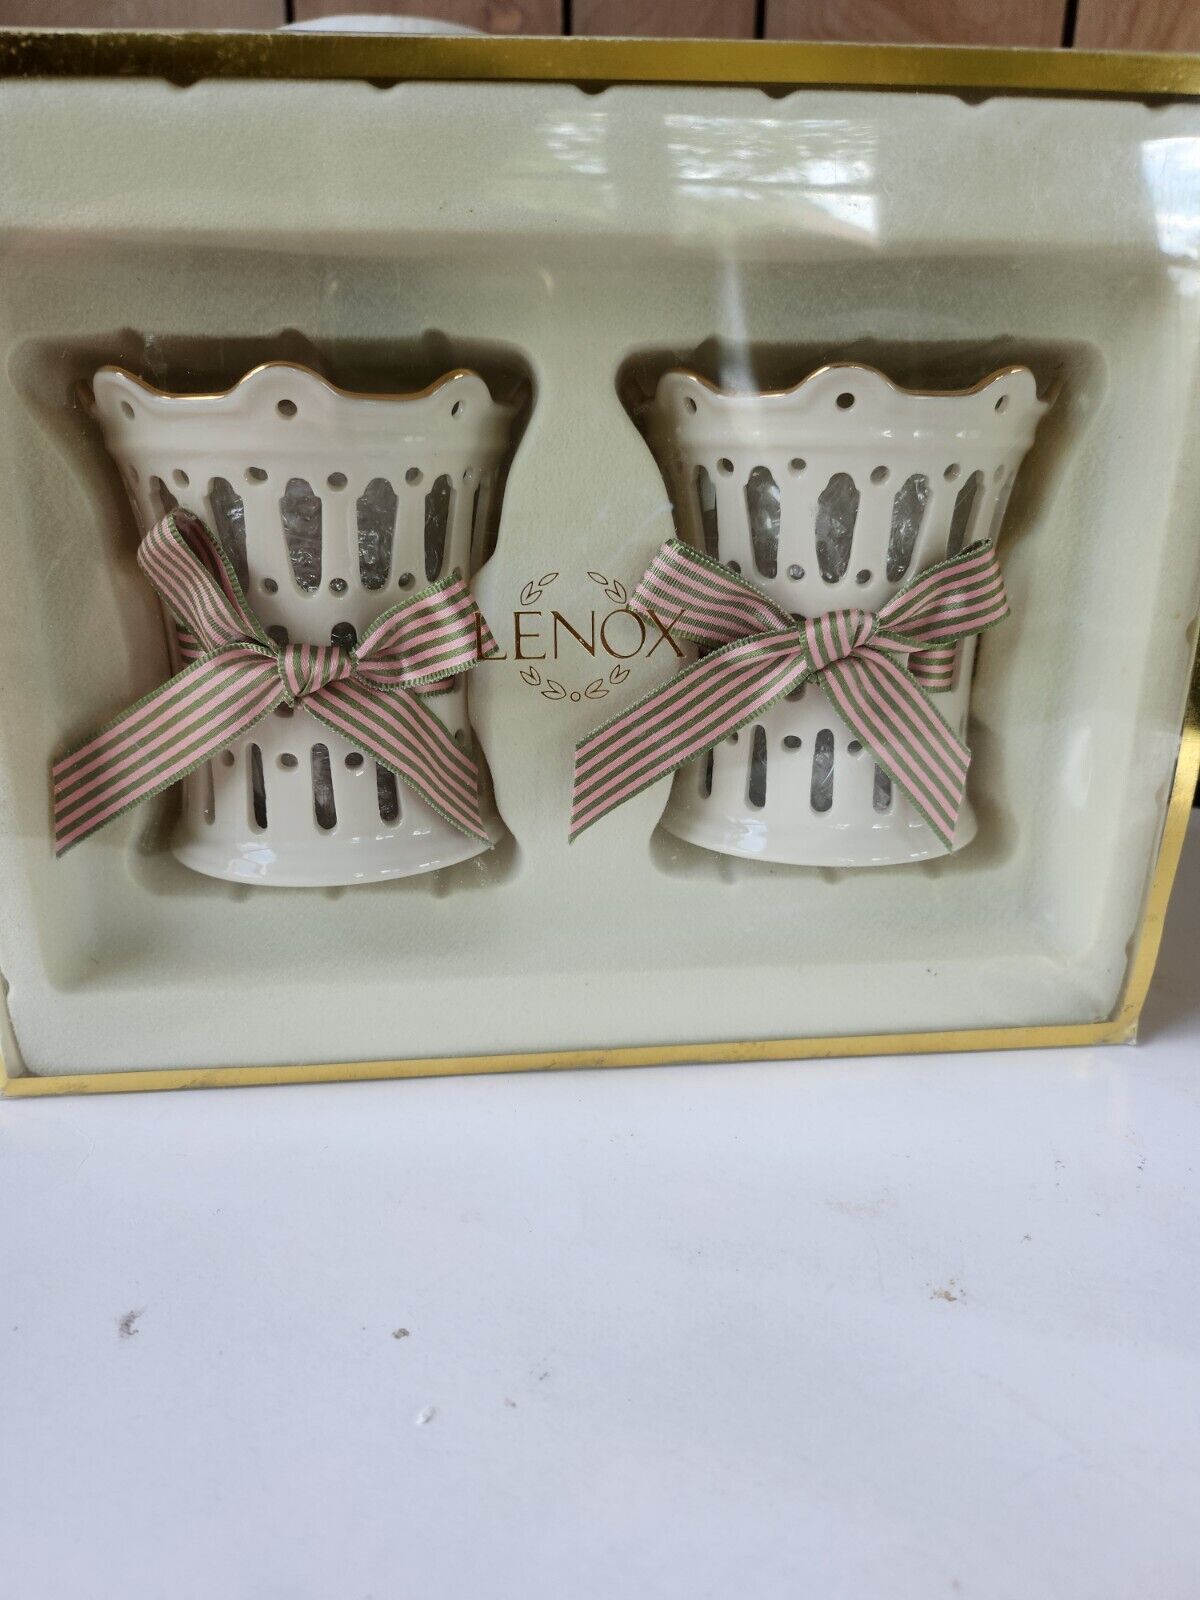 Lenox - NIB - Set of 2 - Votive Candle Holders - Pierced and Ribbons - GIFT IDEA